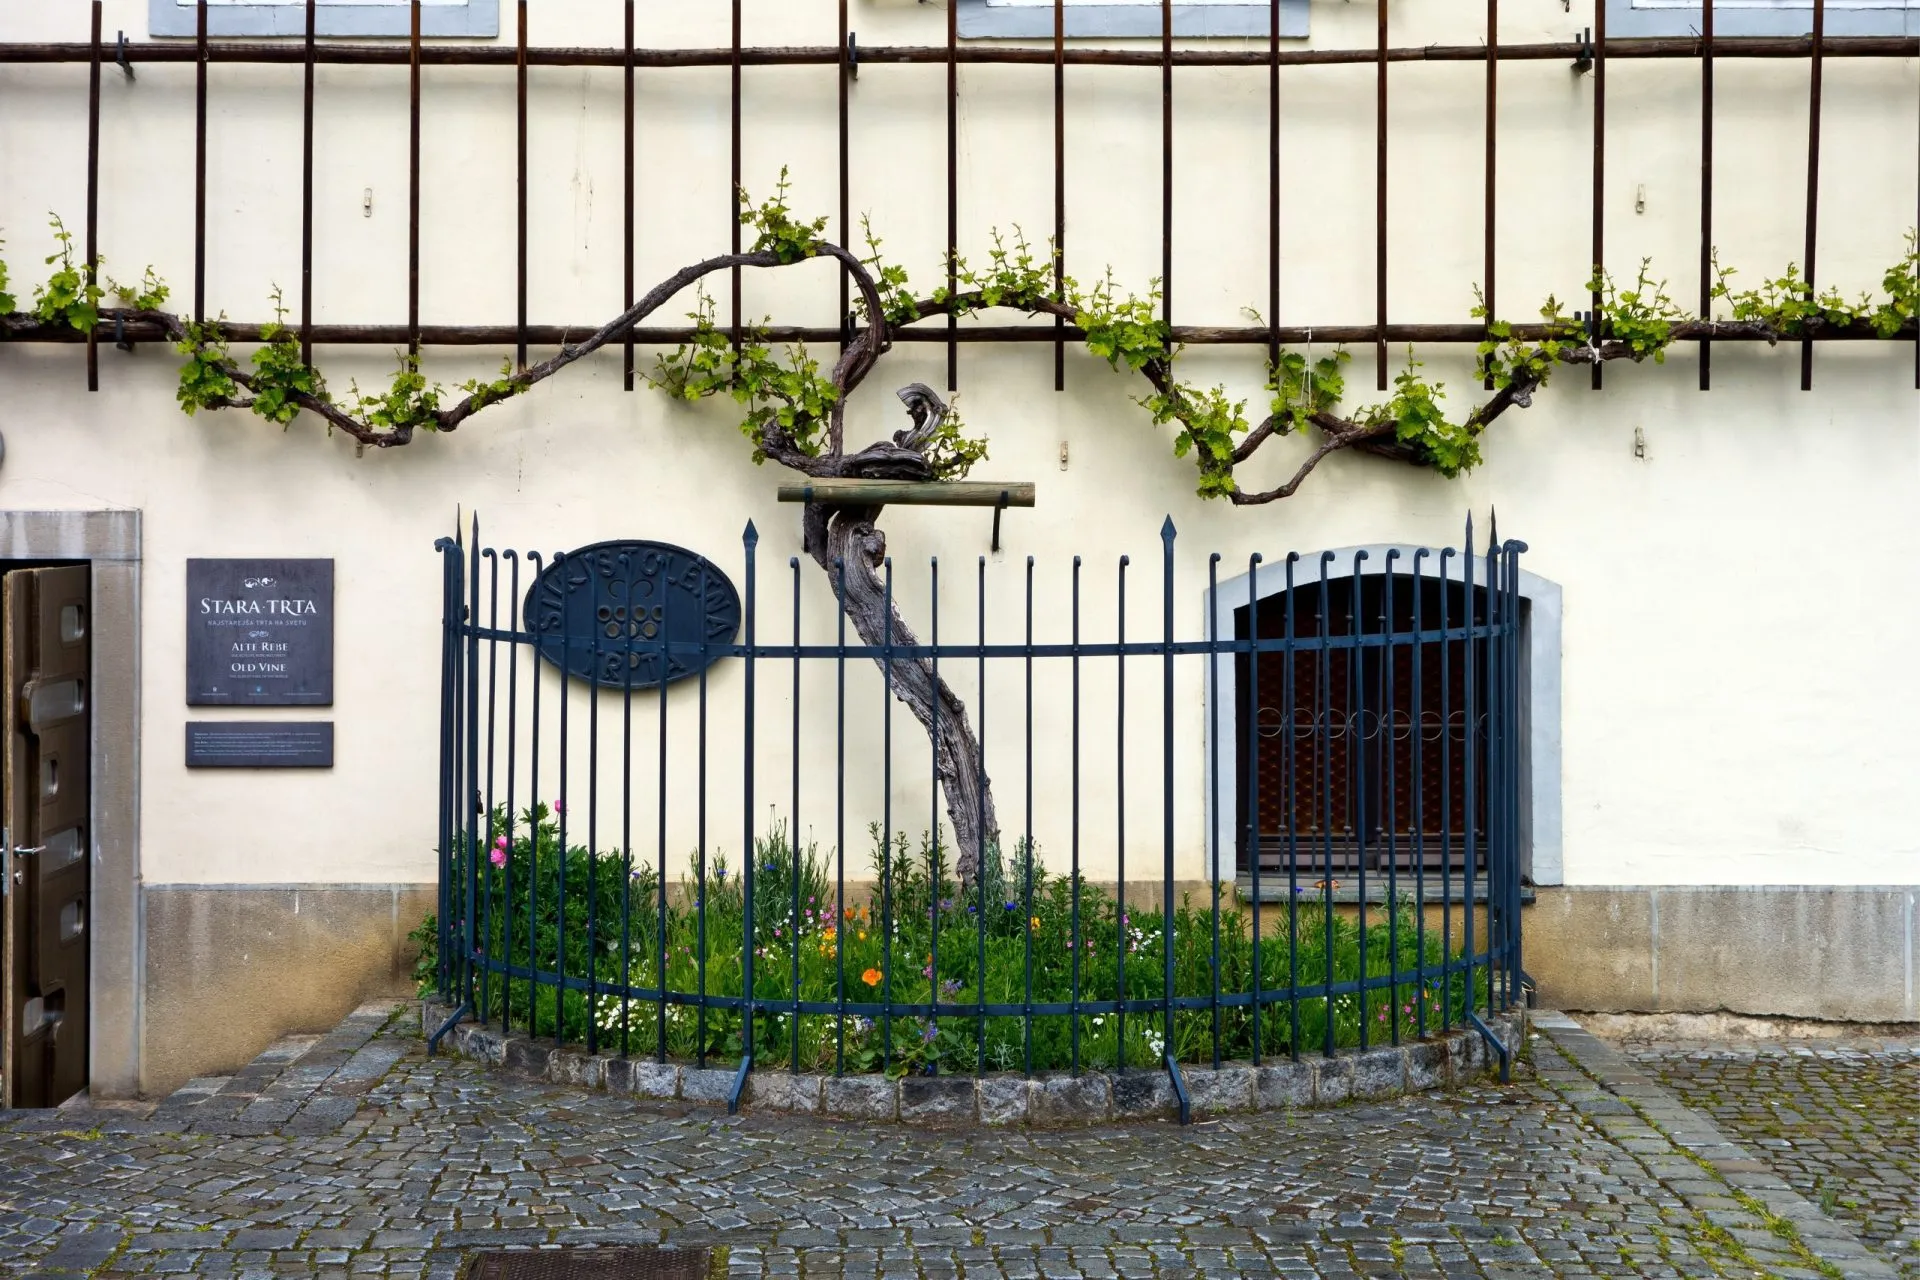 Oldest vine in the world